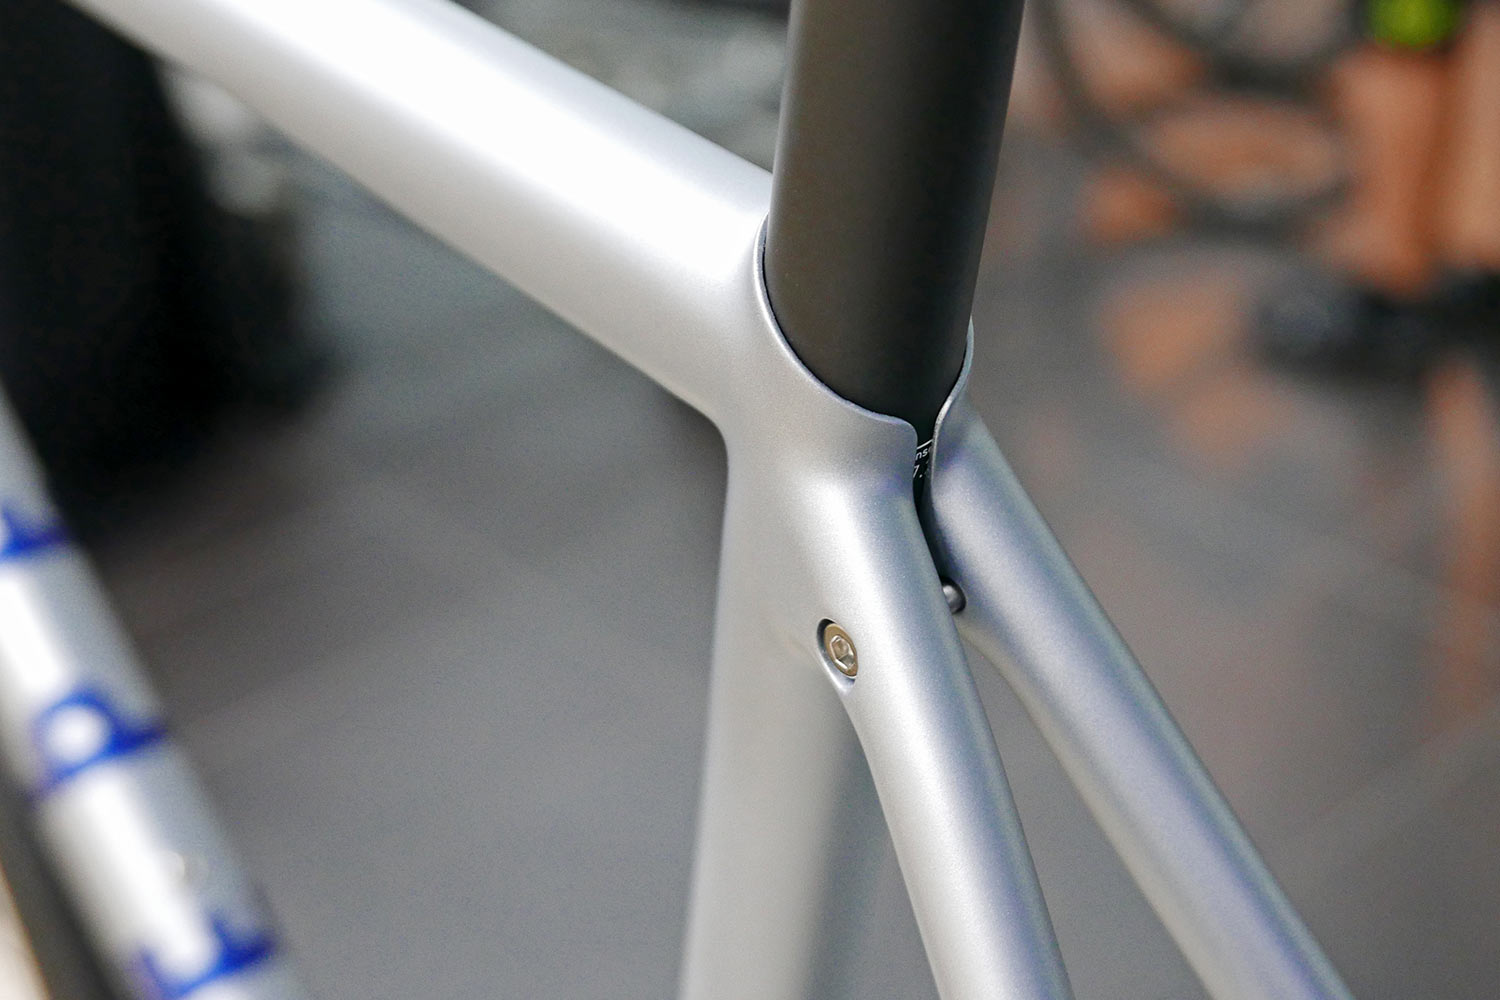 Repete R3 Reason fully integrated handmade modern steel road bike, hidden seatpost clamp